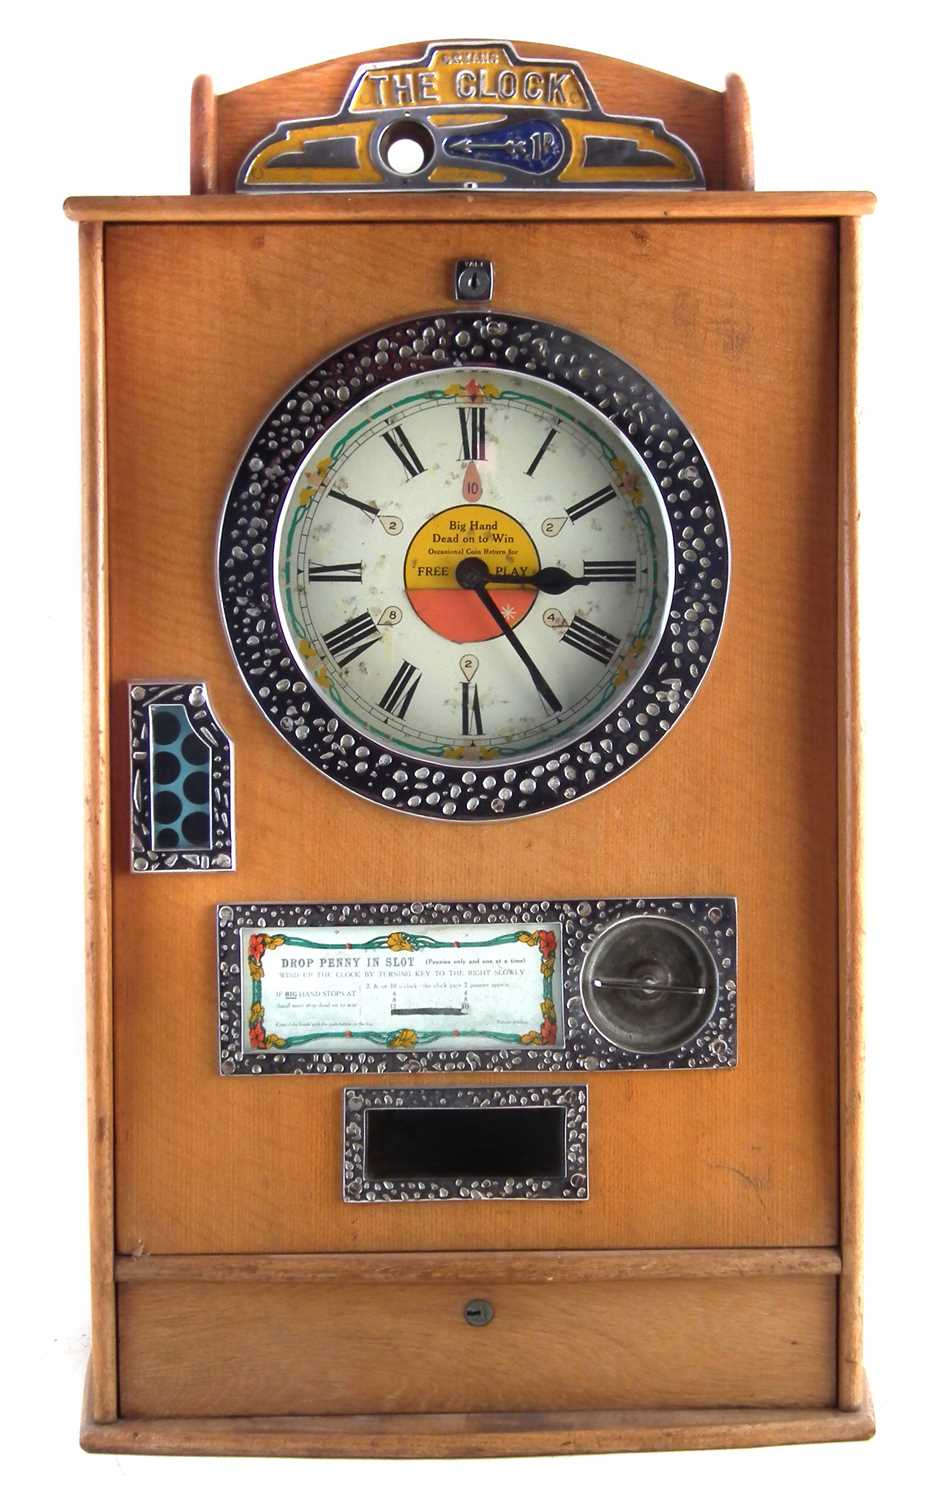 Lot 96 - Bryan's The Clock penny slot machine